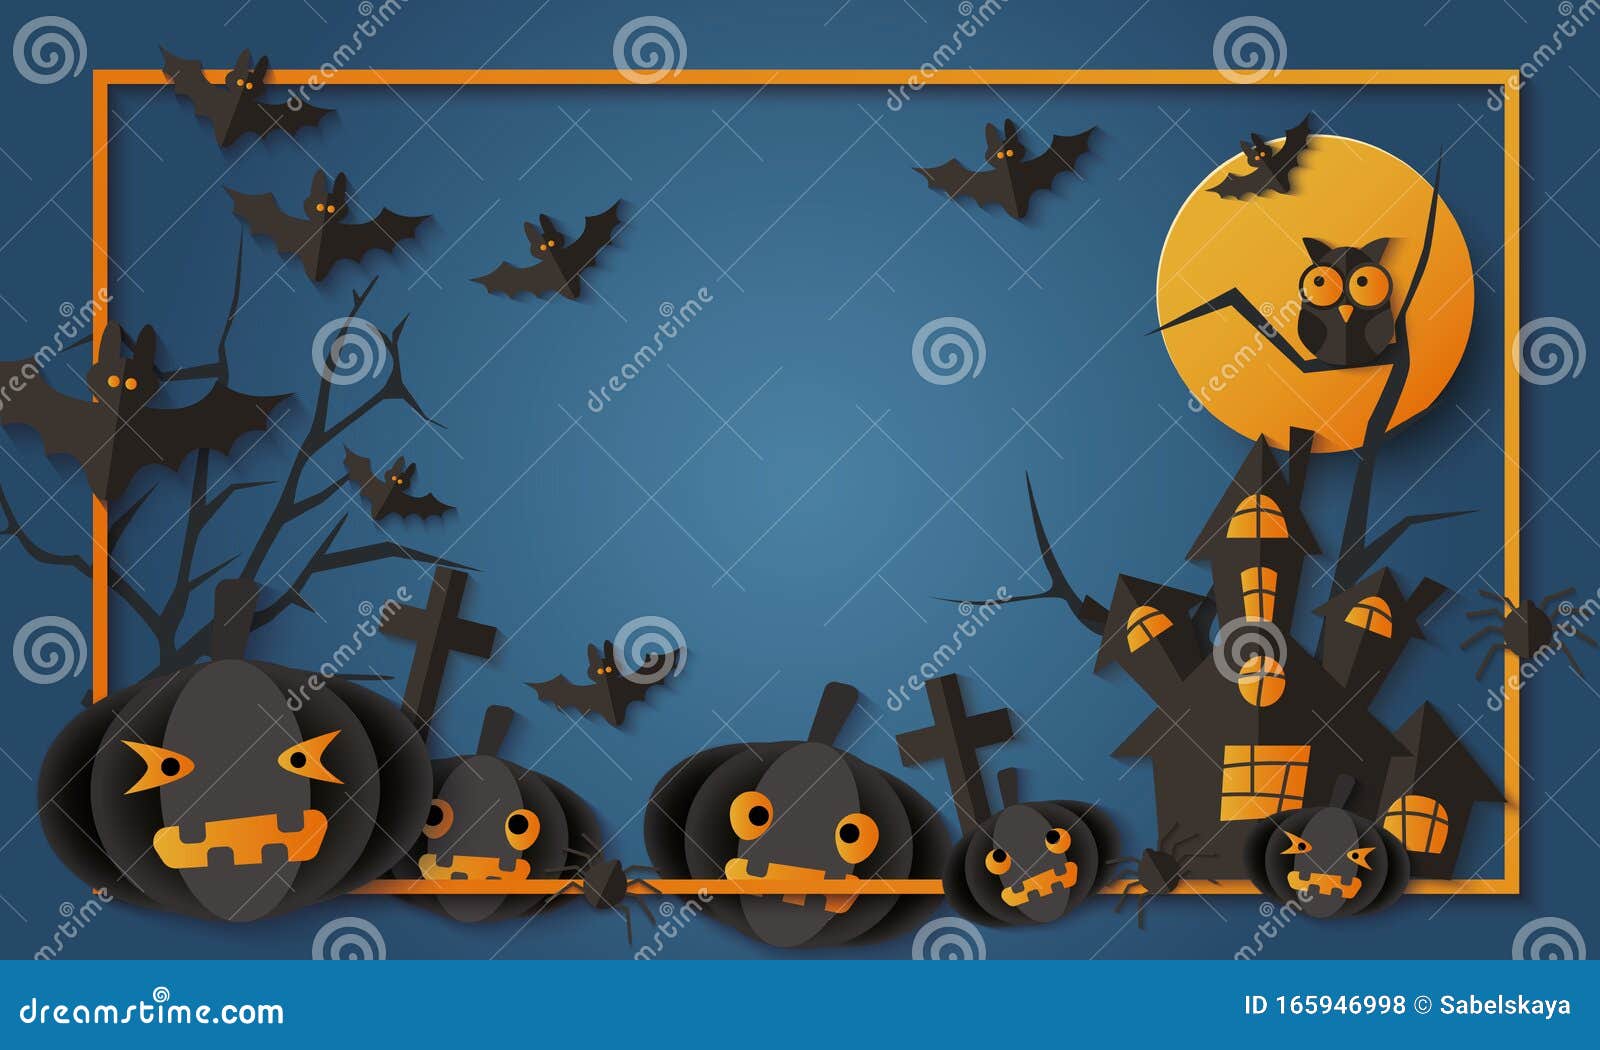 Premium Vector  Bat net and pumpkins halloween background with